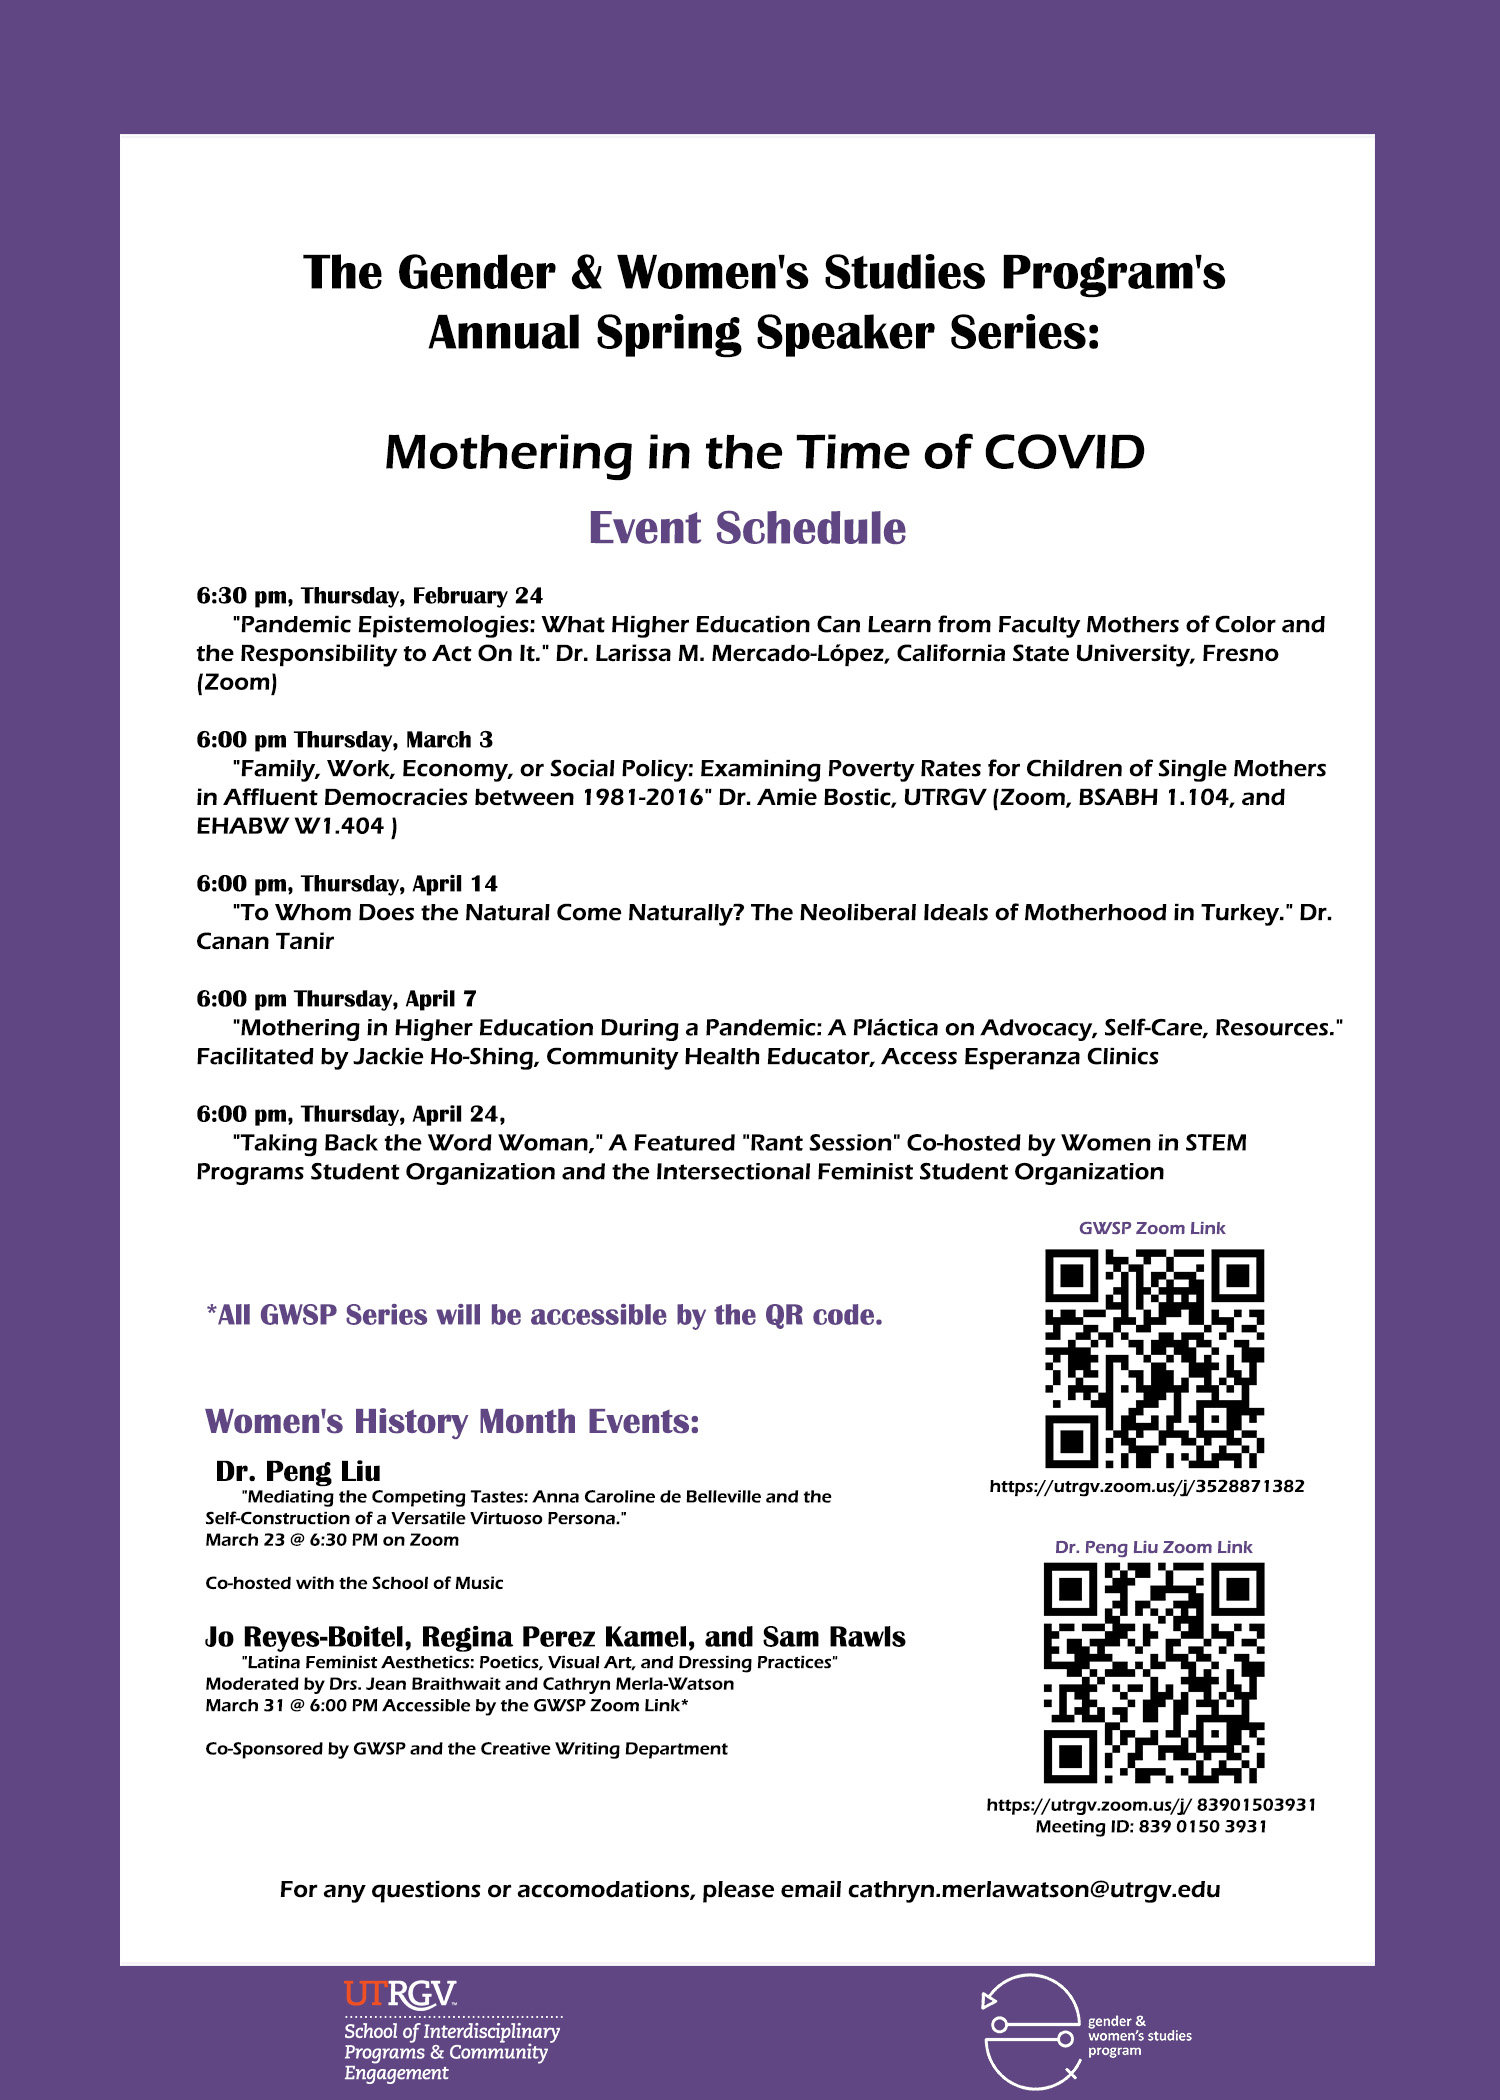 Gender & Women's Studies Program's Annual Spring Speaker Series: Mothering in the Time of COVID